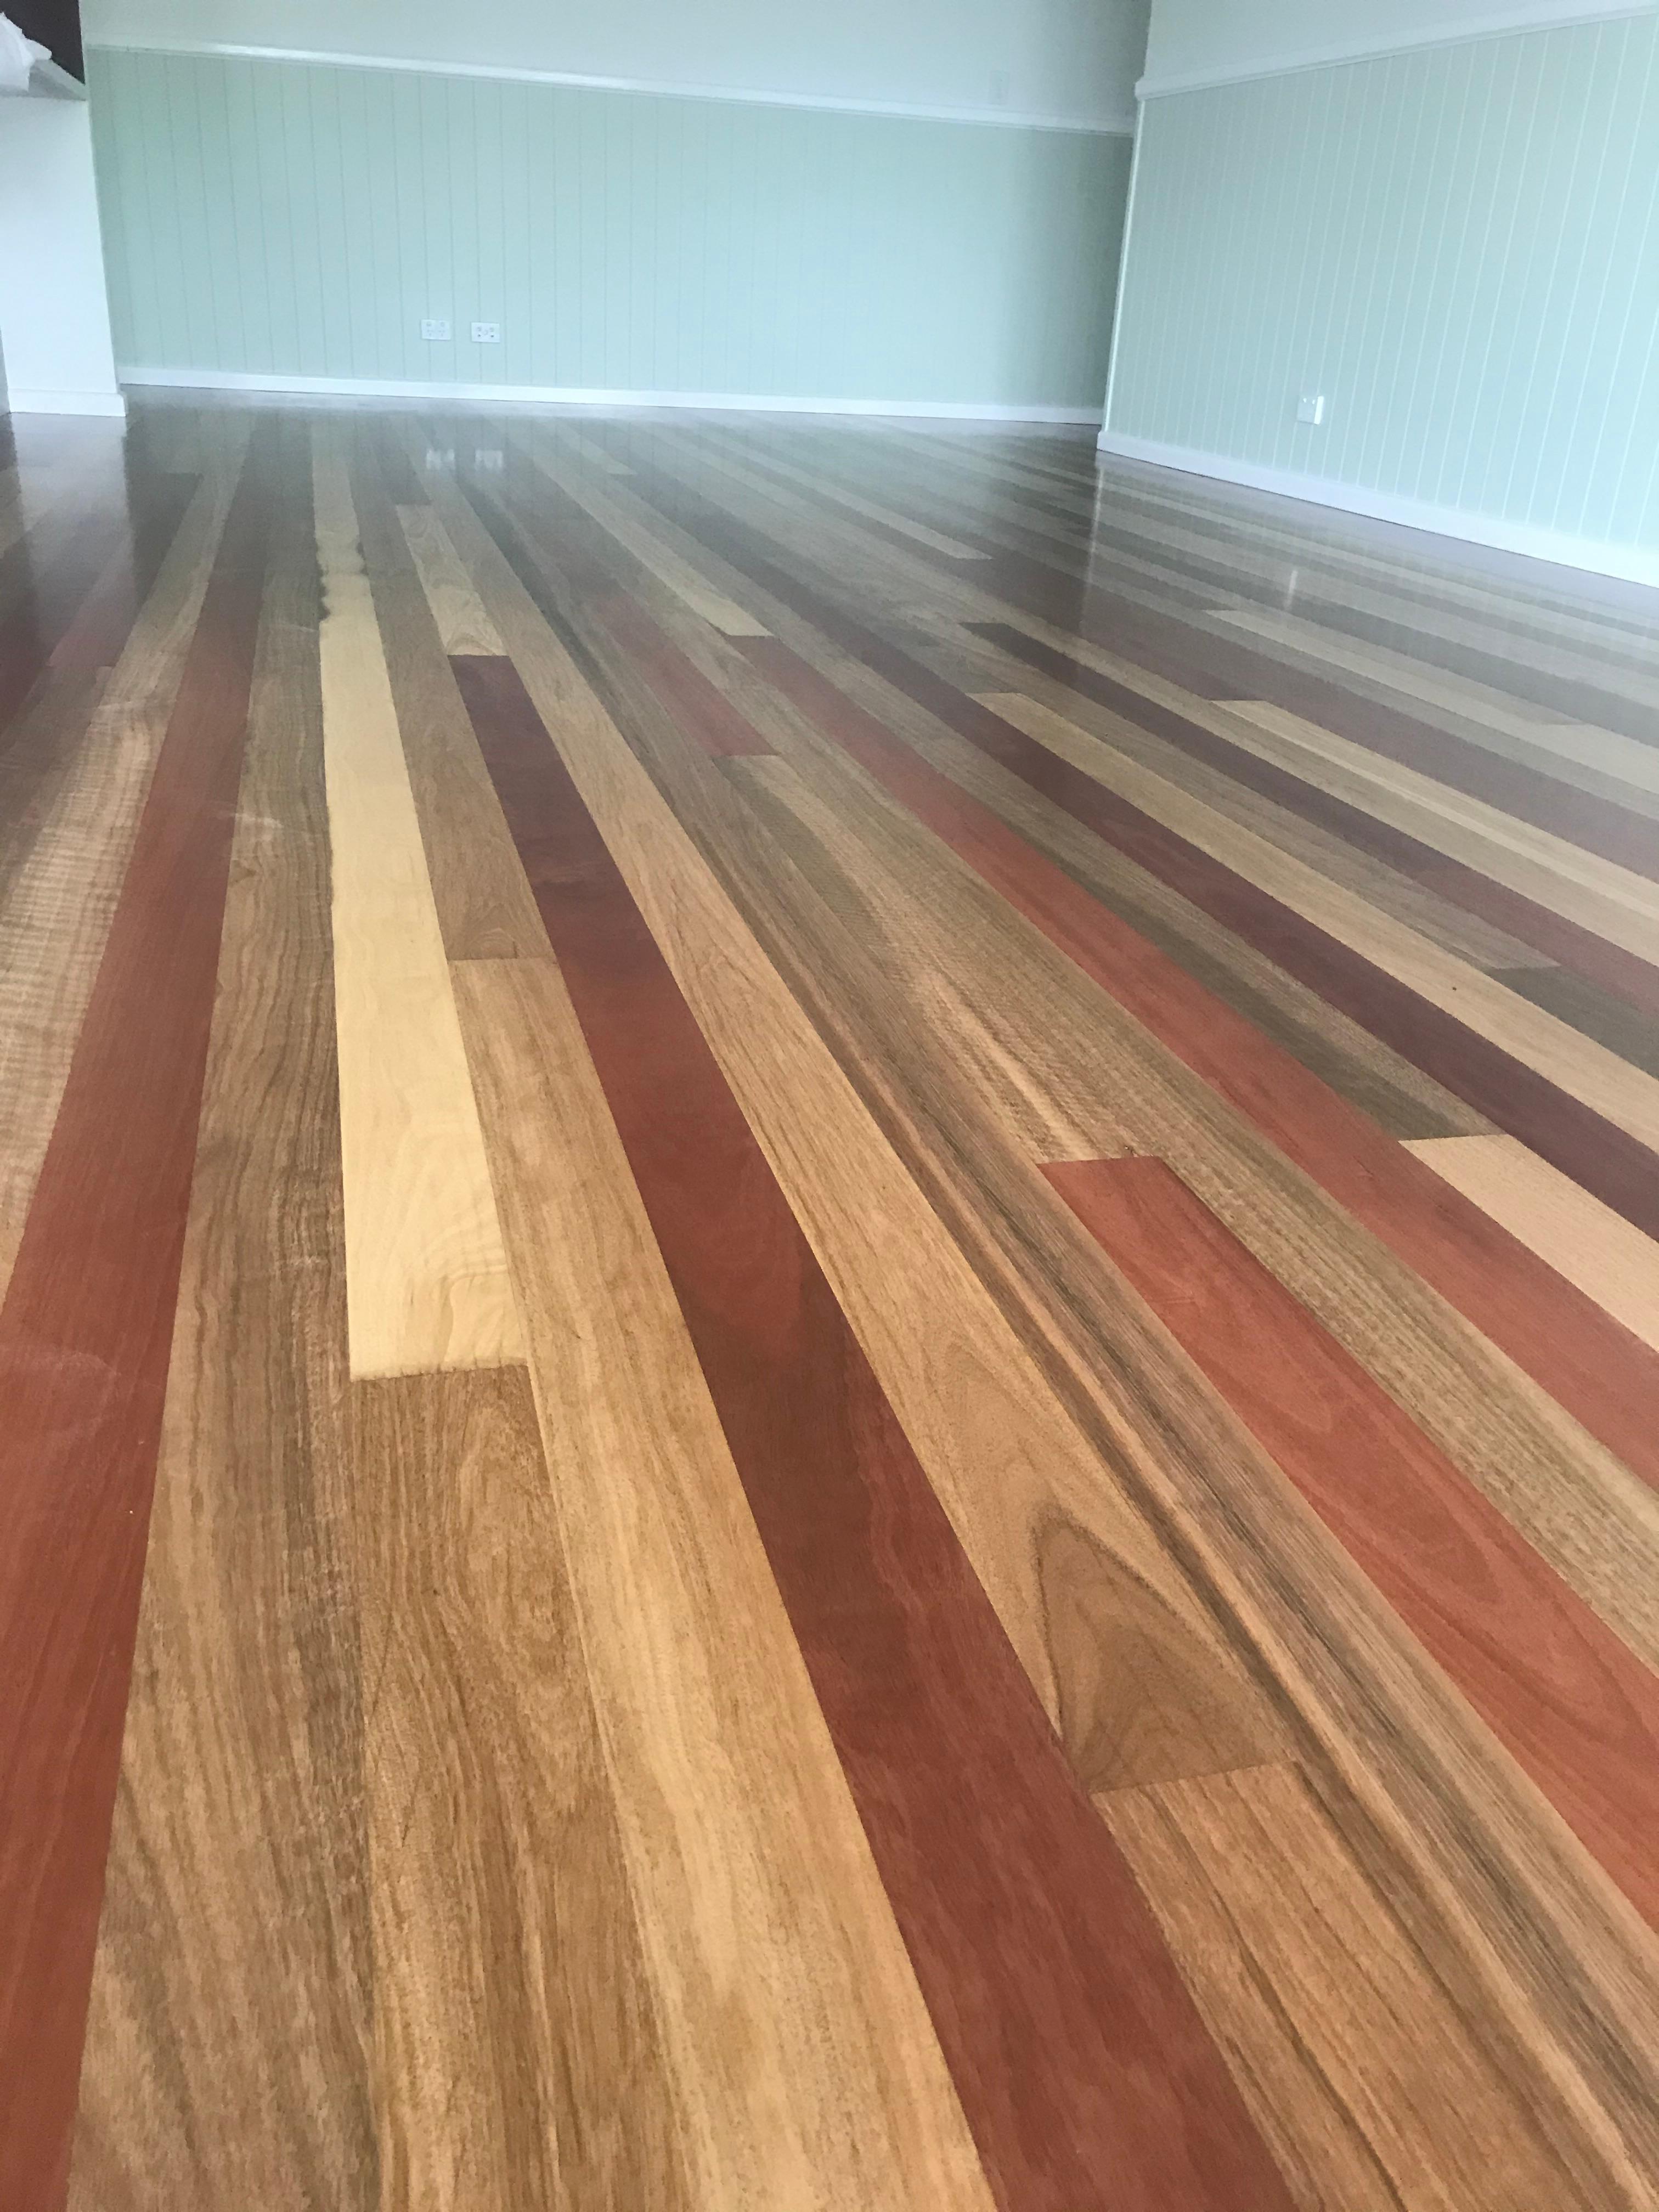 O.M. (Gint) Smith Floor Sanding & Polishing - Burpengary, QLD - 0417 008 575 | ShowMeLocal.com